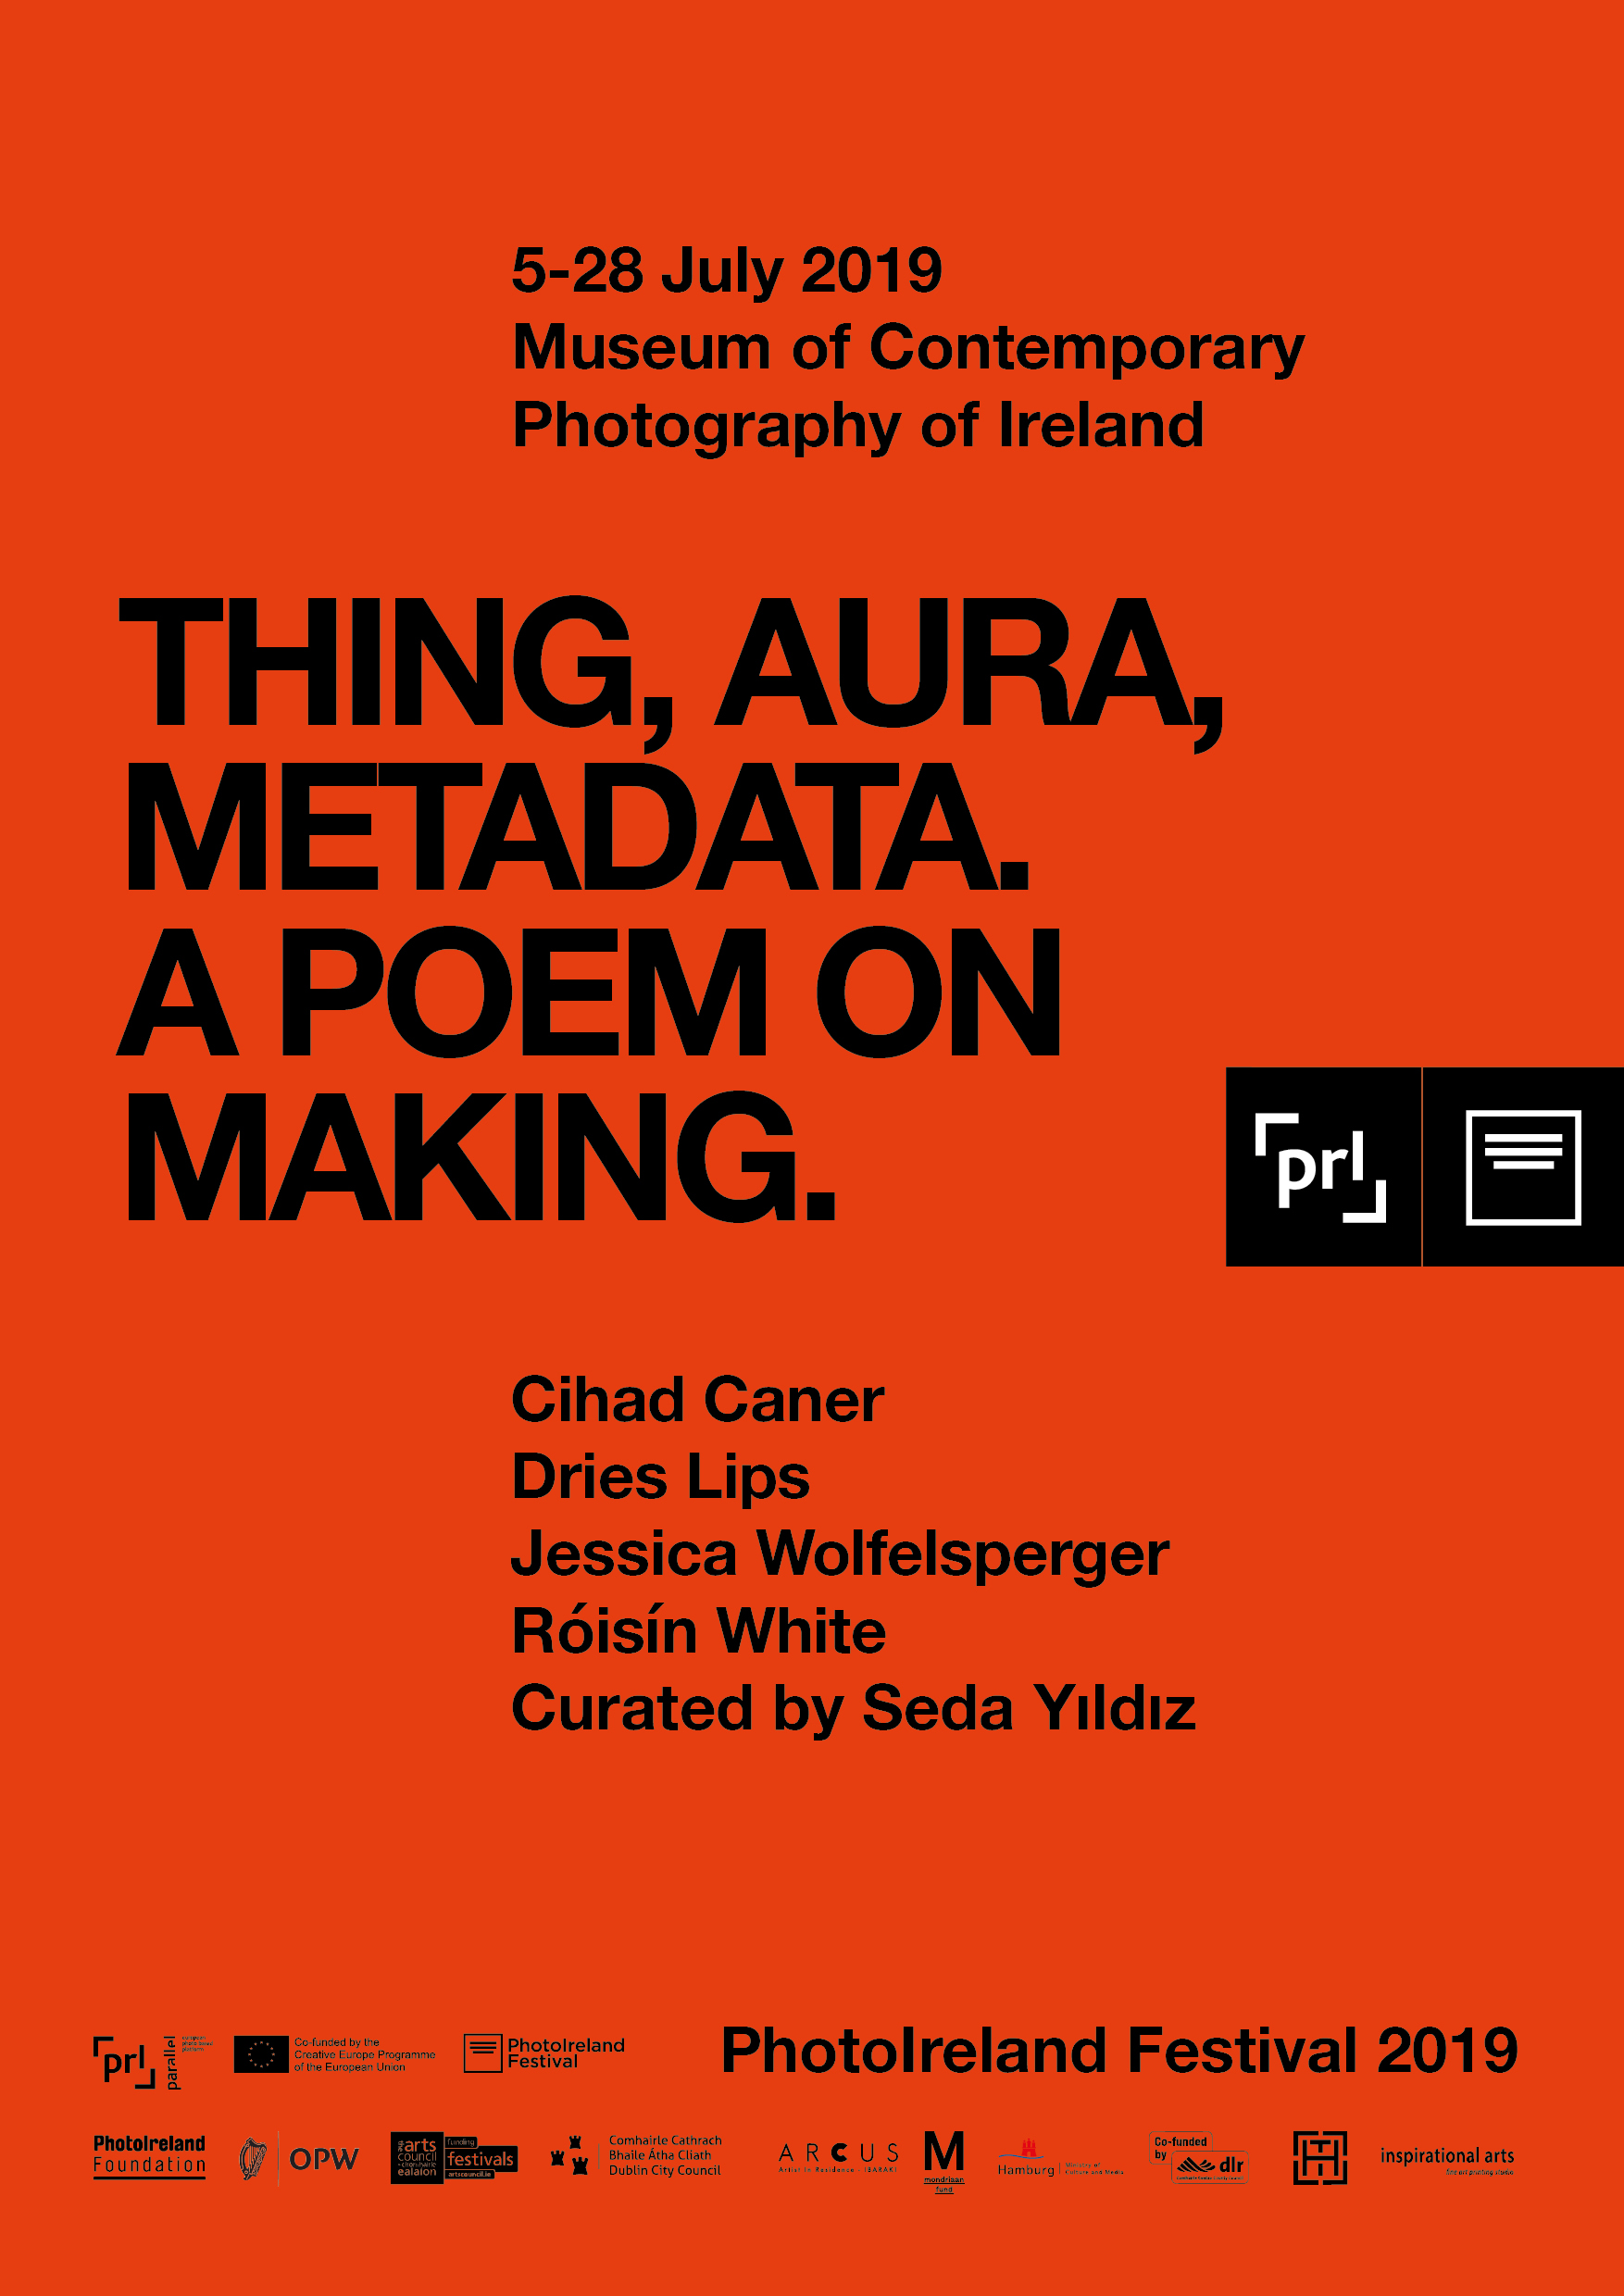 thing, aura, metadata. A poem on making.